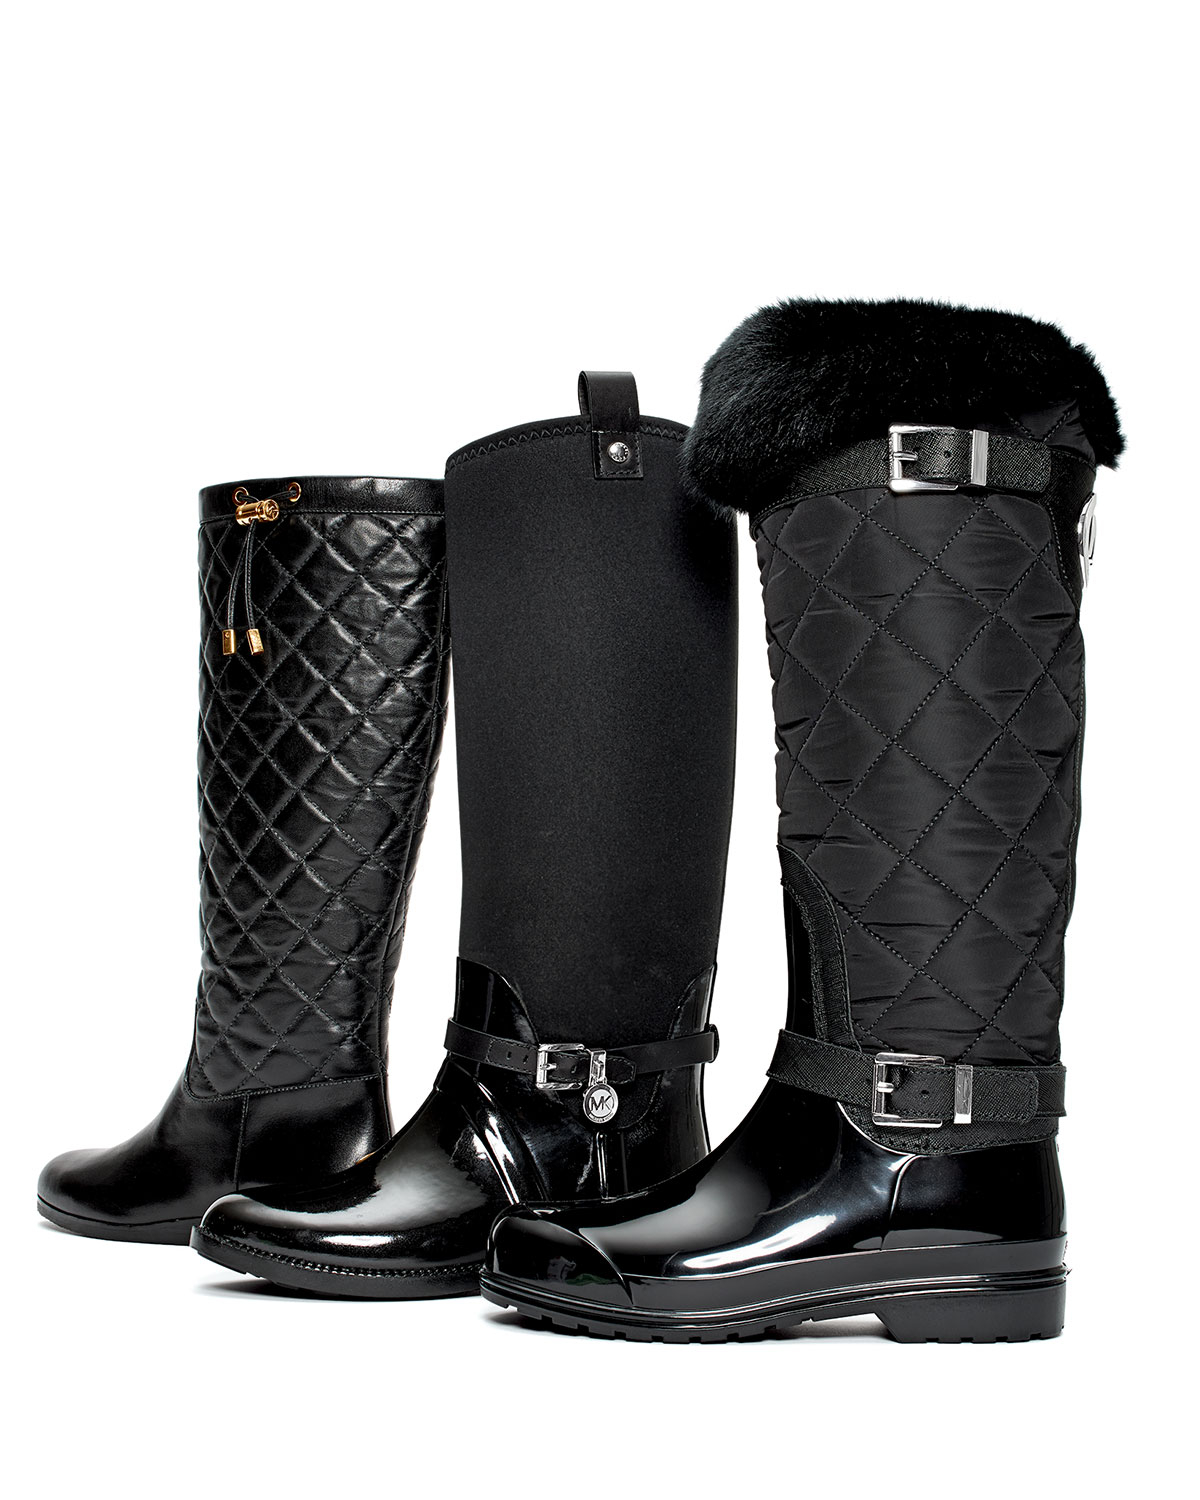 michael kors quilted rain boots black and gold high heels - Marwood  VeneerMarwood Veneer